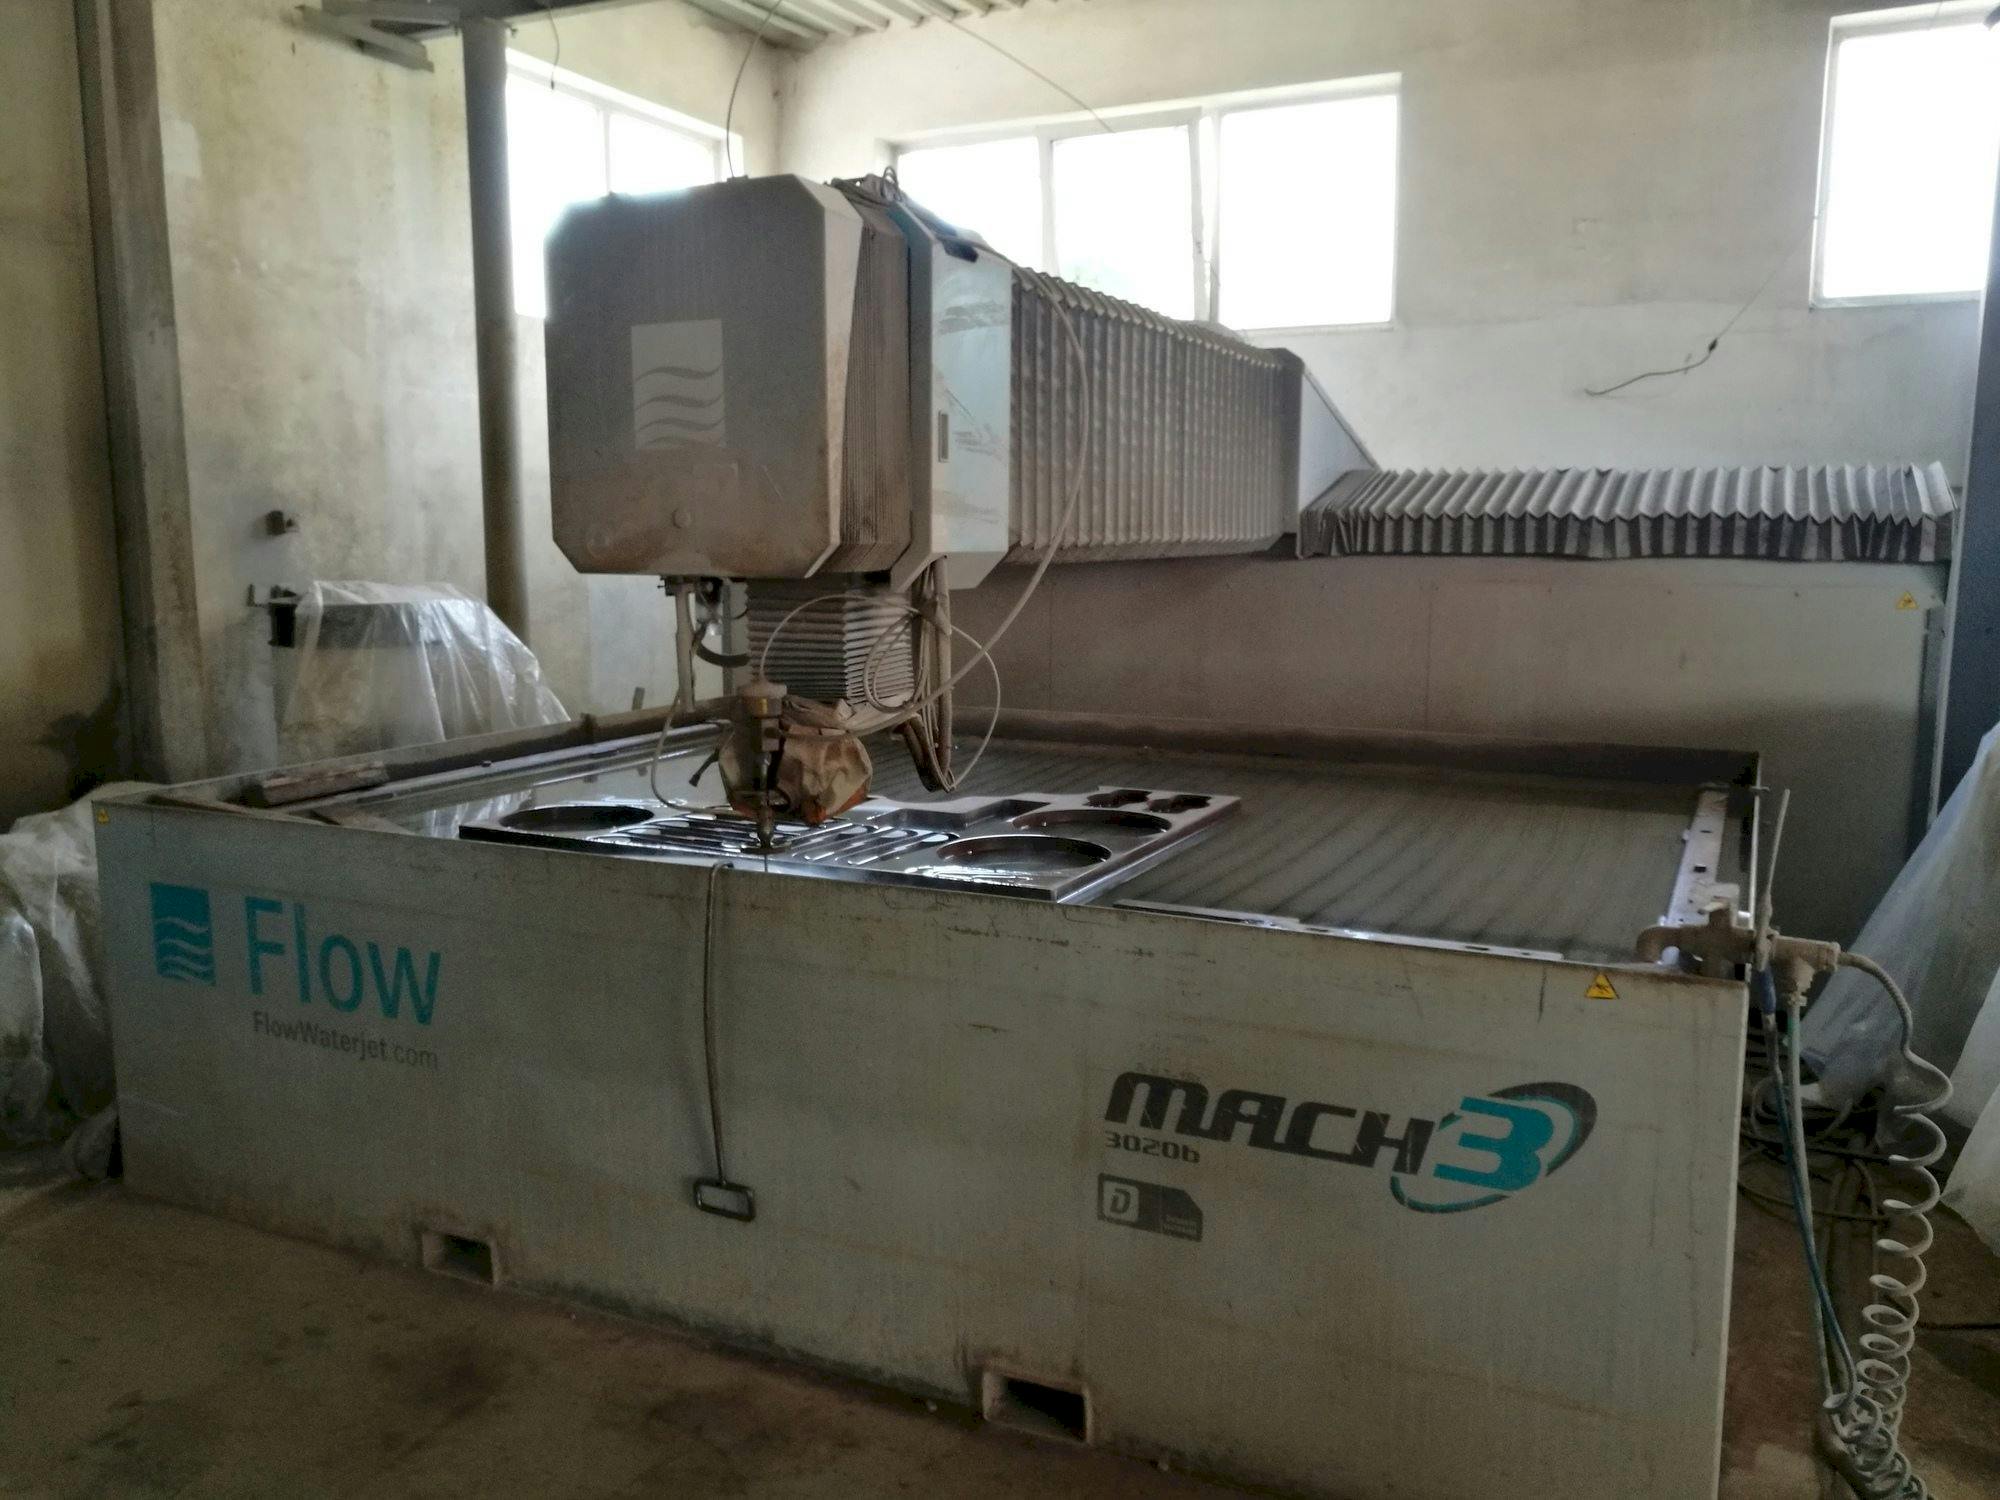 Vista Frontal  da Flow Mach3-3020b  máquina